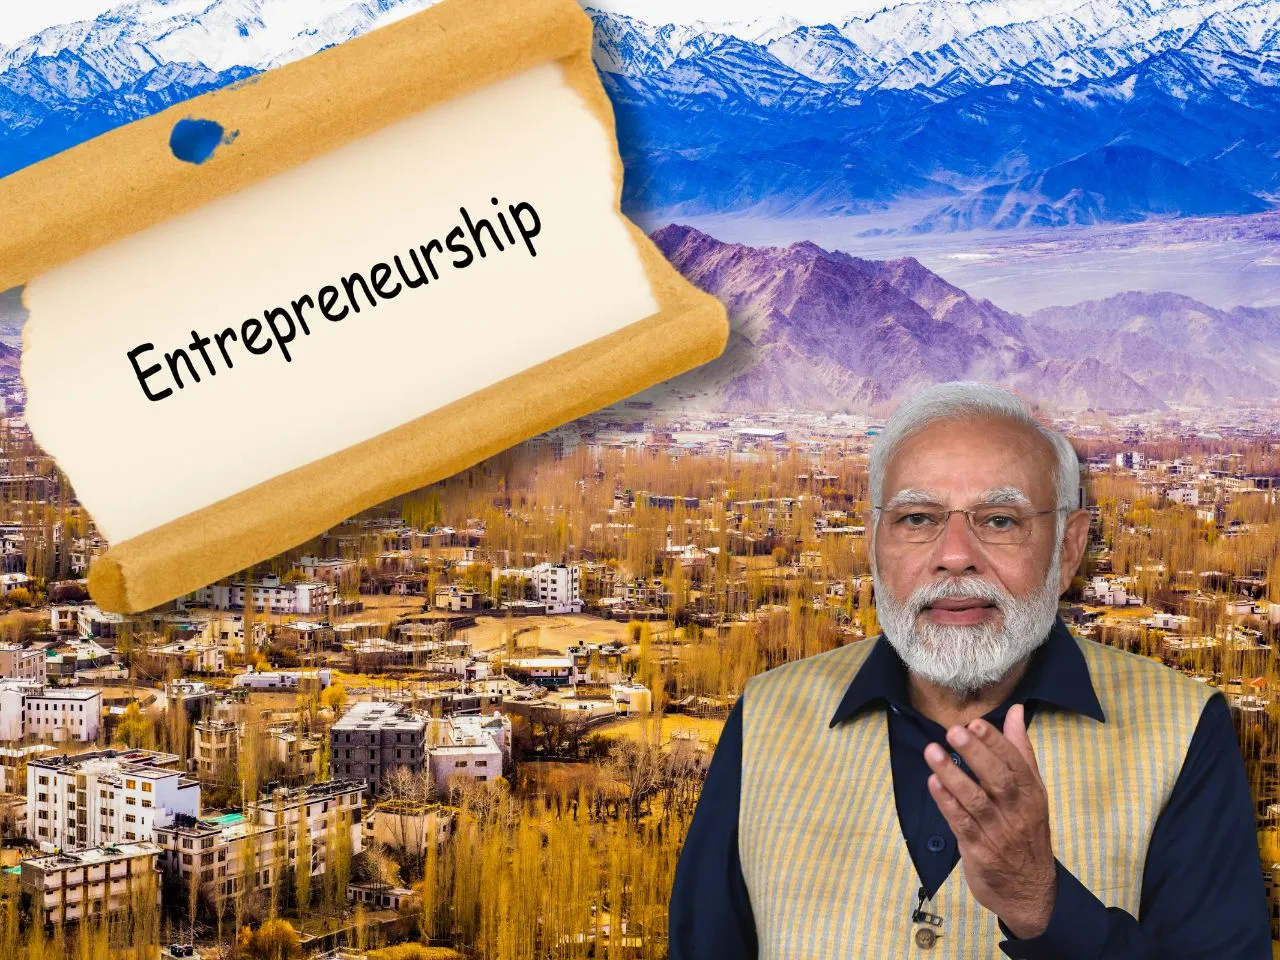 PM Modi Hails India's Entrepreneurial Progress In Parliament